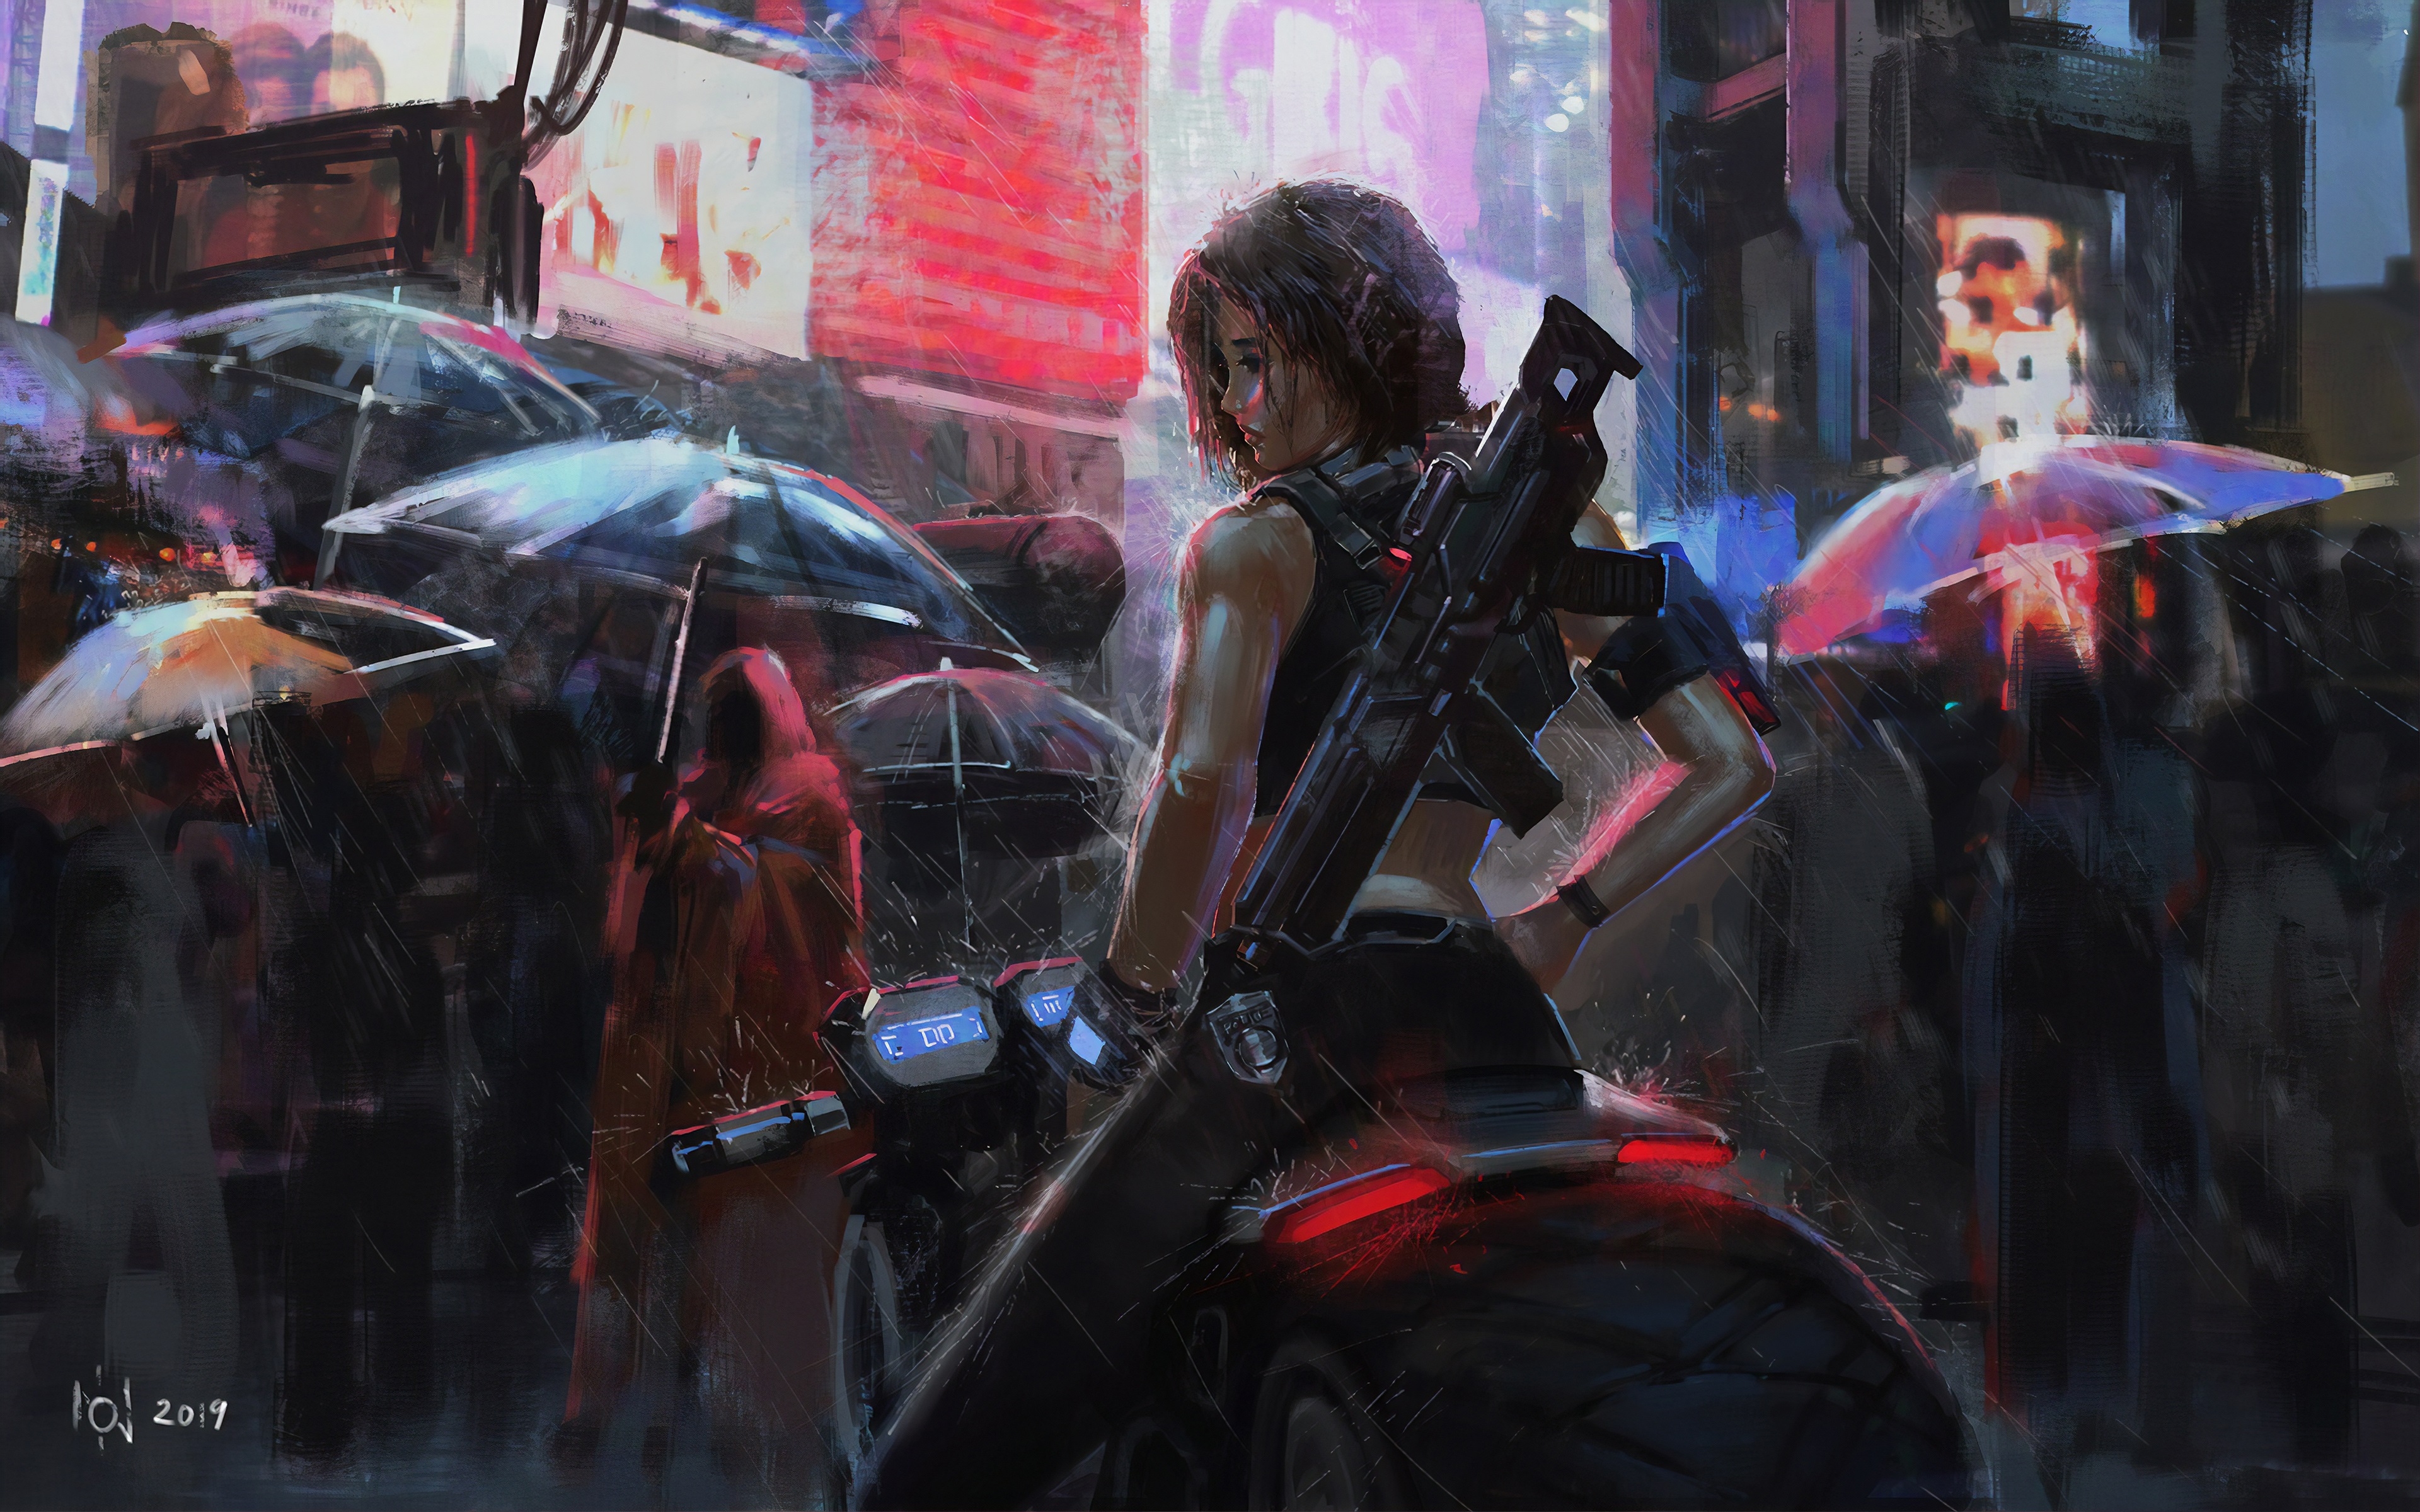 General 3840x2400 women Asian weapon city umbrella rain futuristic motorcycle fantasy art night Huy Tran Viet